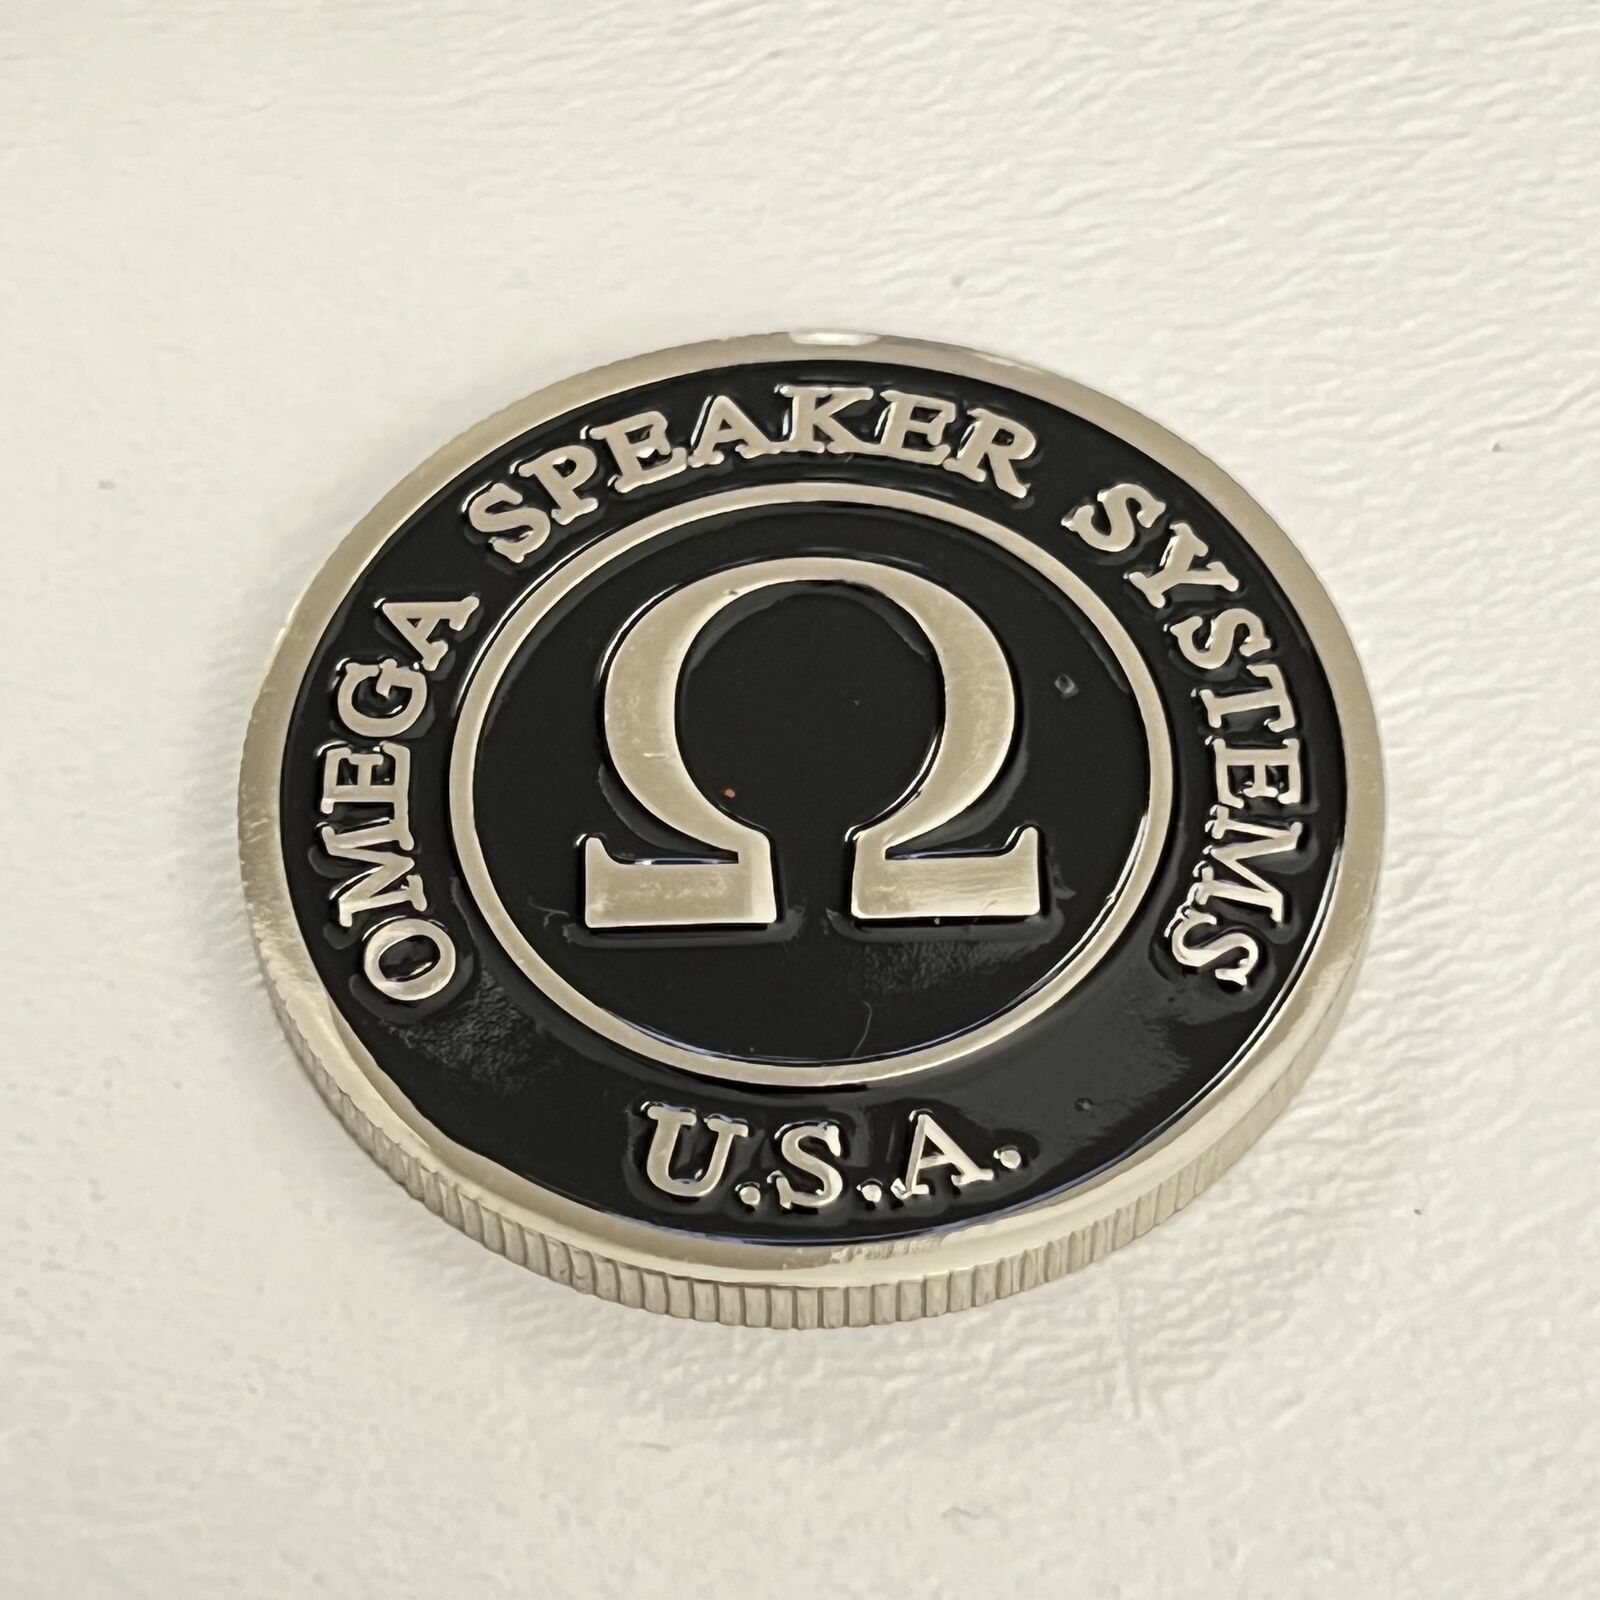 Omega Speaker Systems Challenge Coin